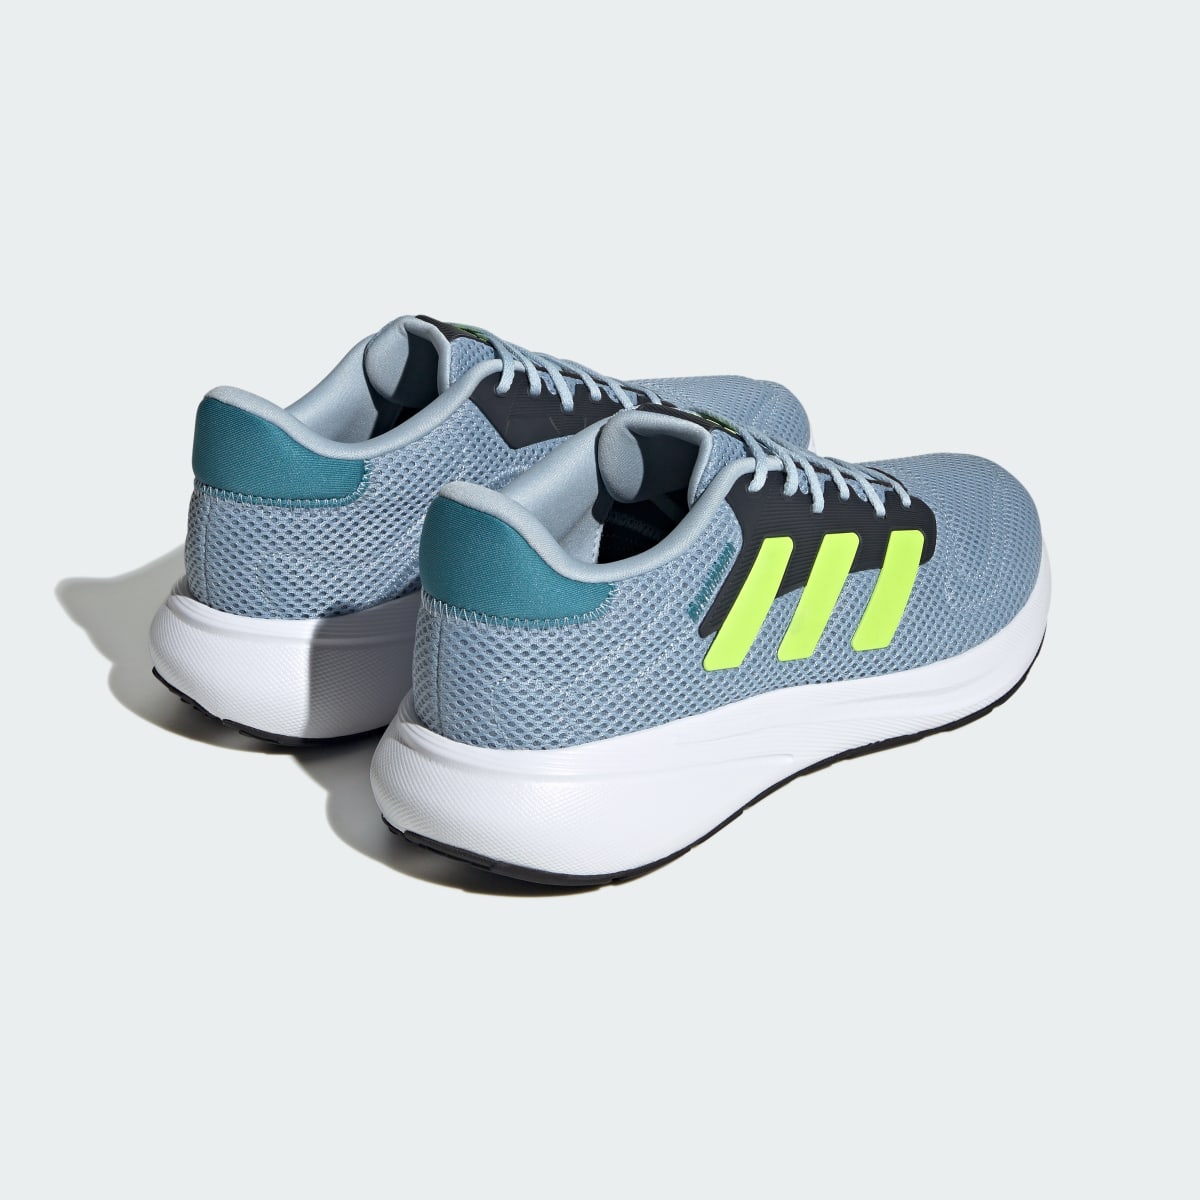 Adidas Response Runner Shoes. 6